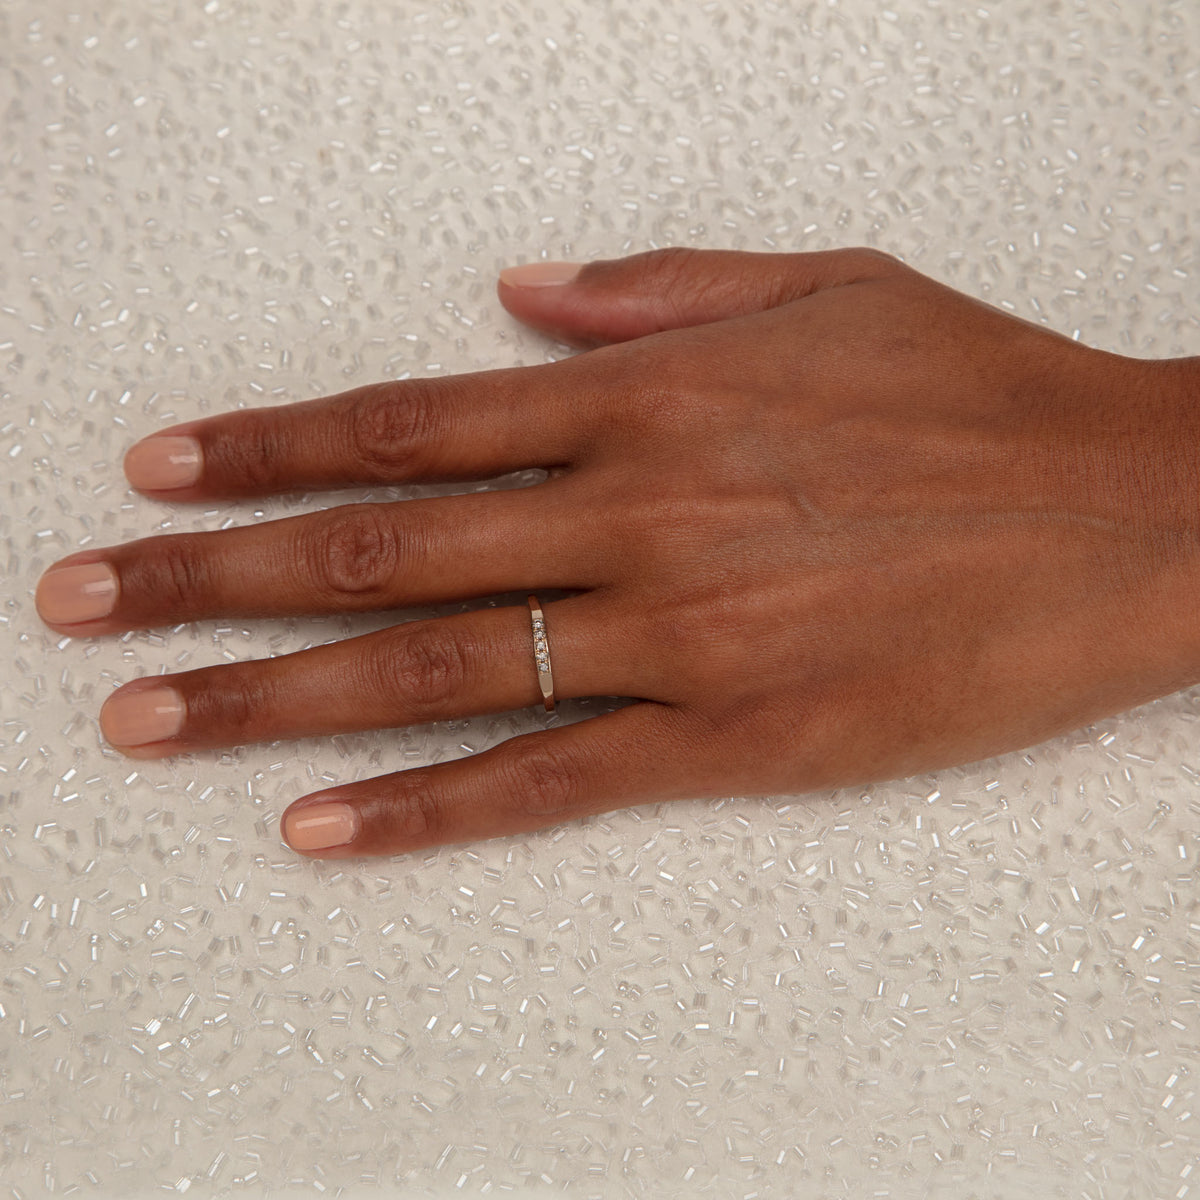 BRIDAL Trust Ring with 5 Grey Diamonds